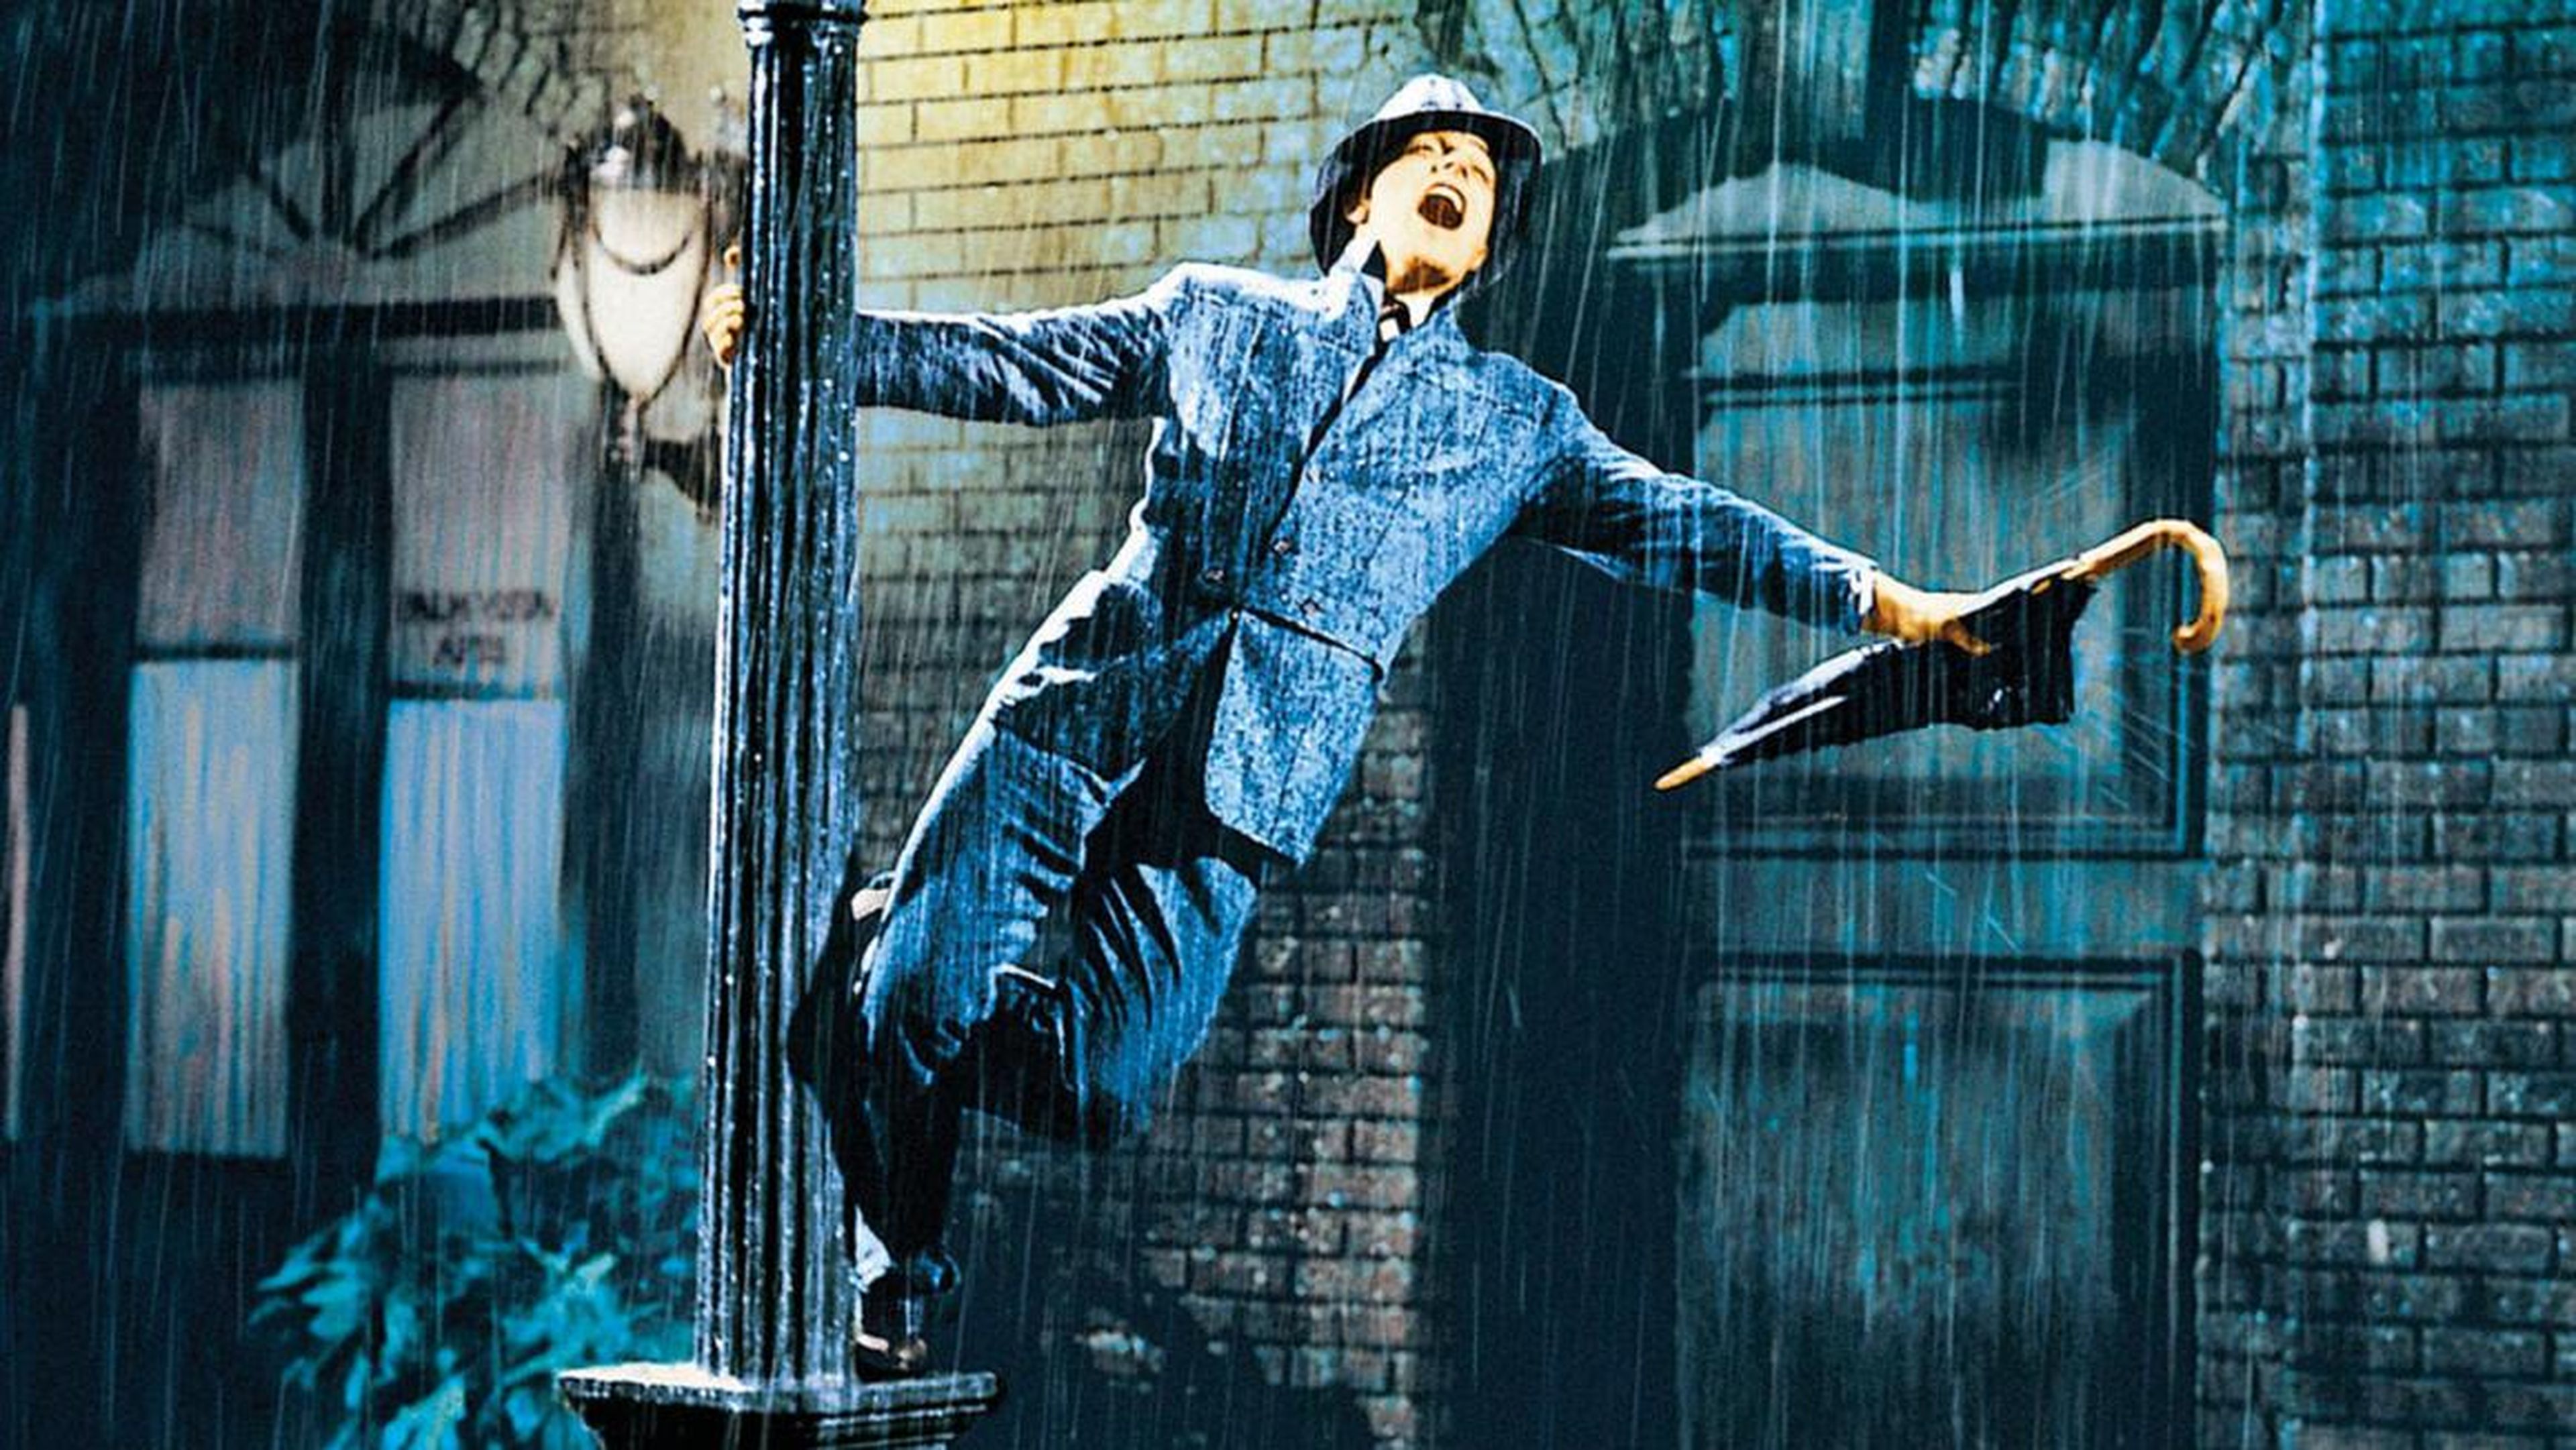 7. "Singin' In The Rain" (1952)